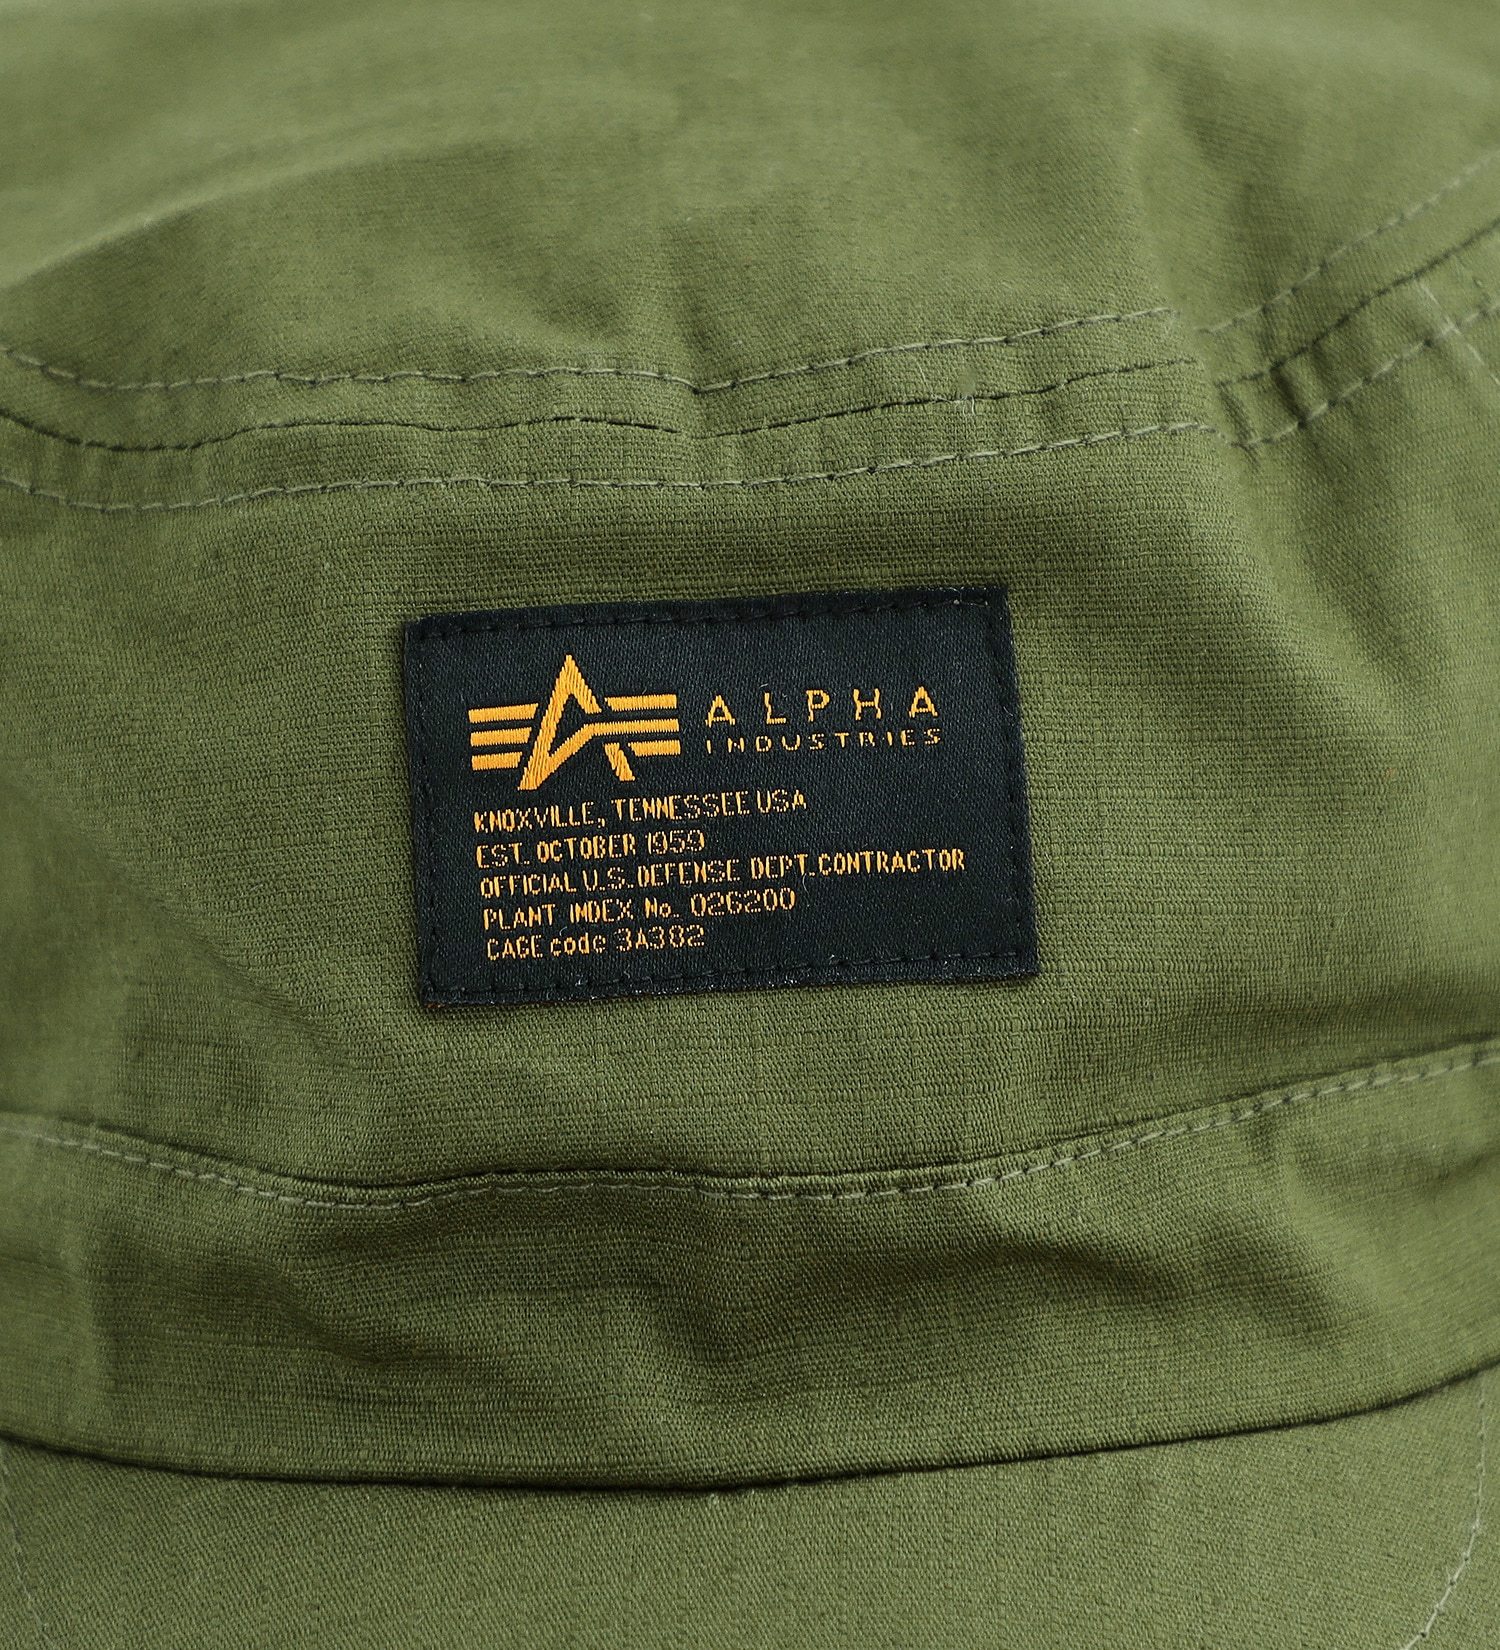 ALPHA(アルファ)のファティーグキャップ|帽子/キャップ/メンズ|オリーブ